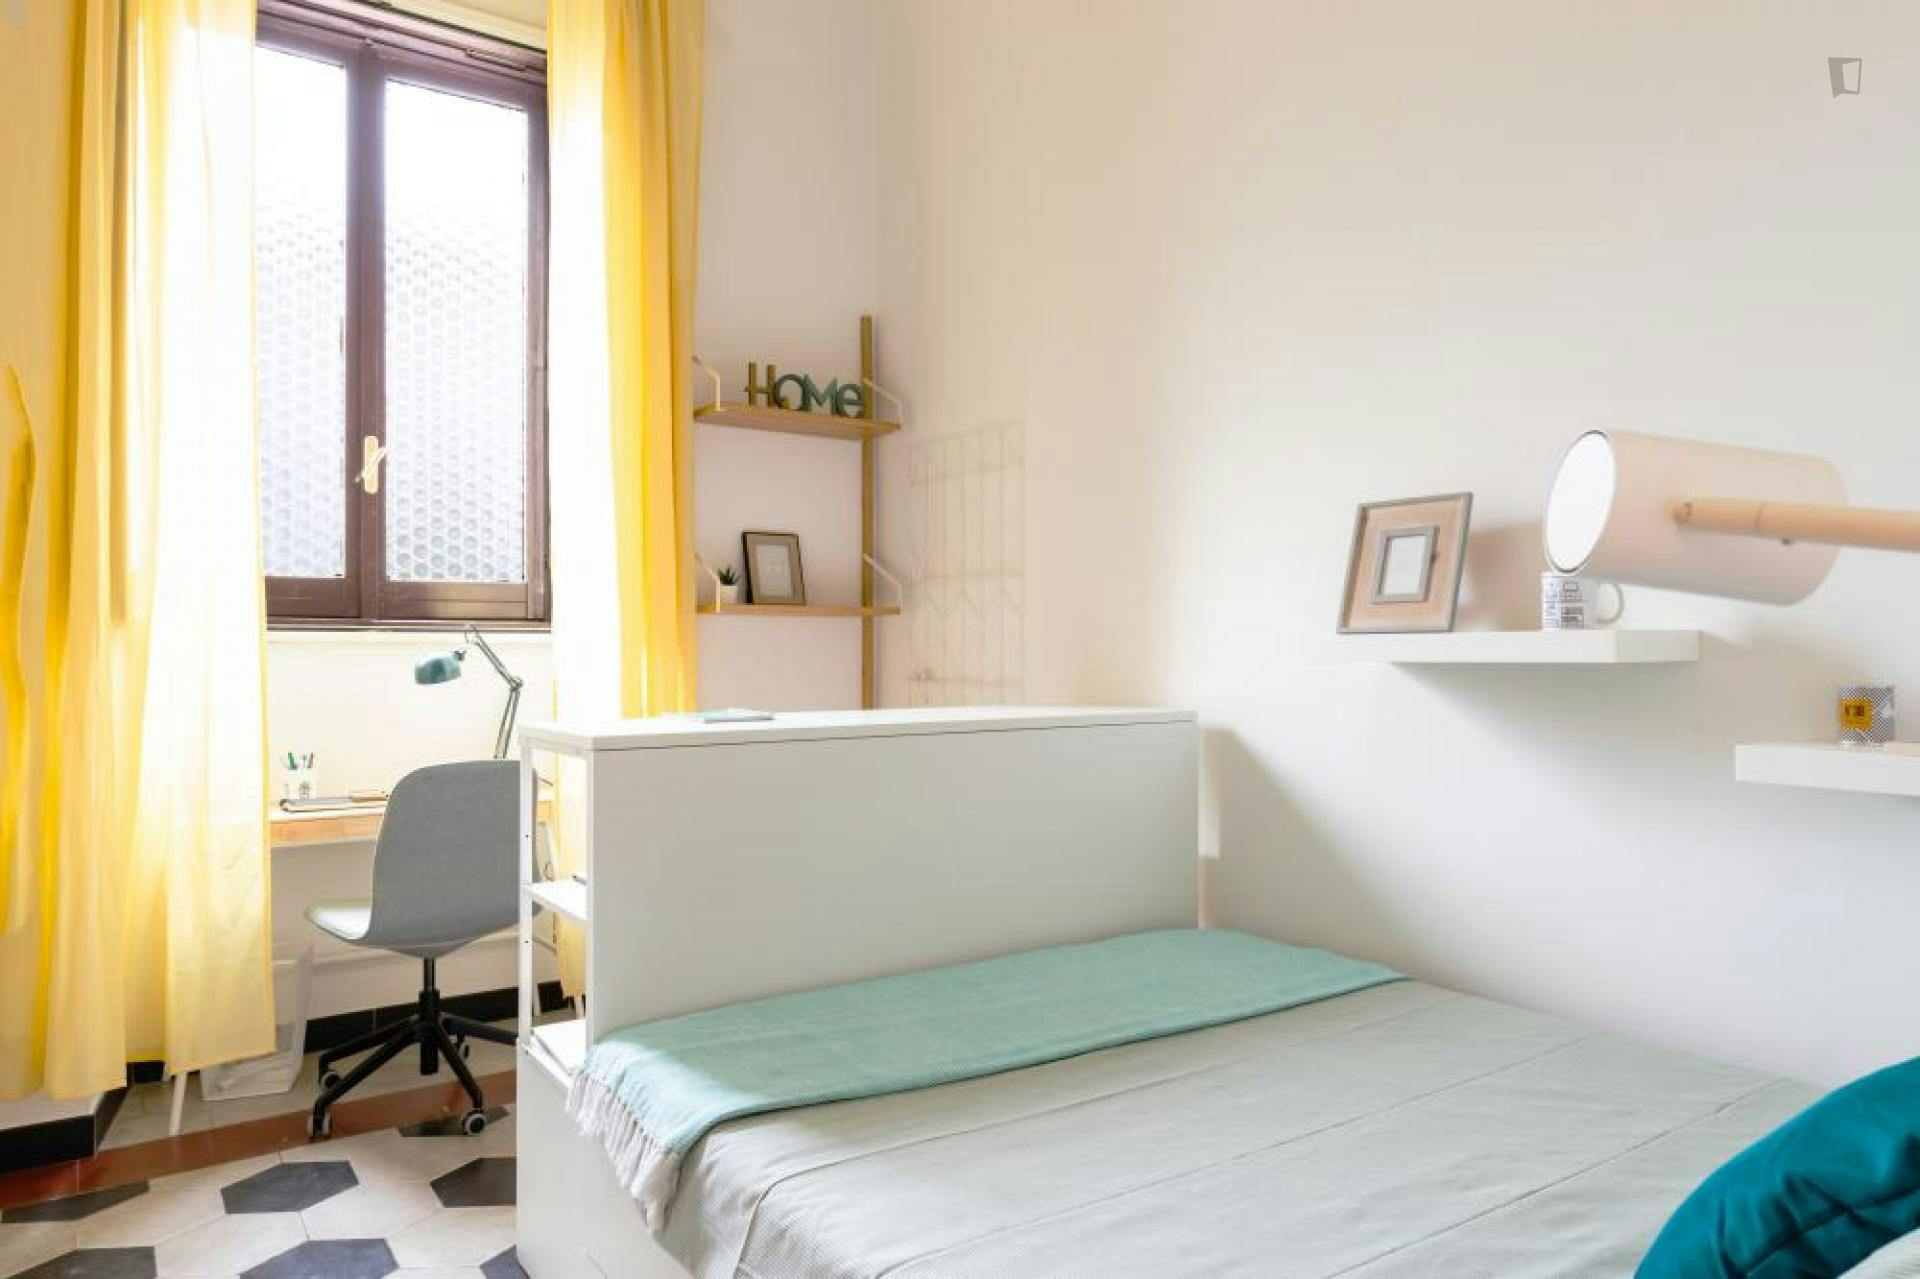 Amazing double bedroom near Villa Borghese Park